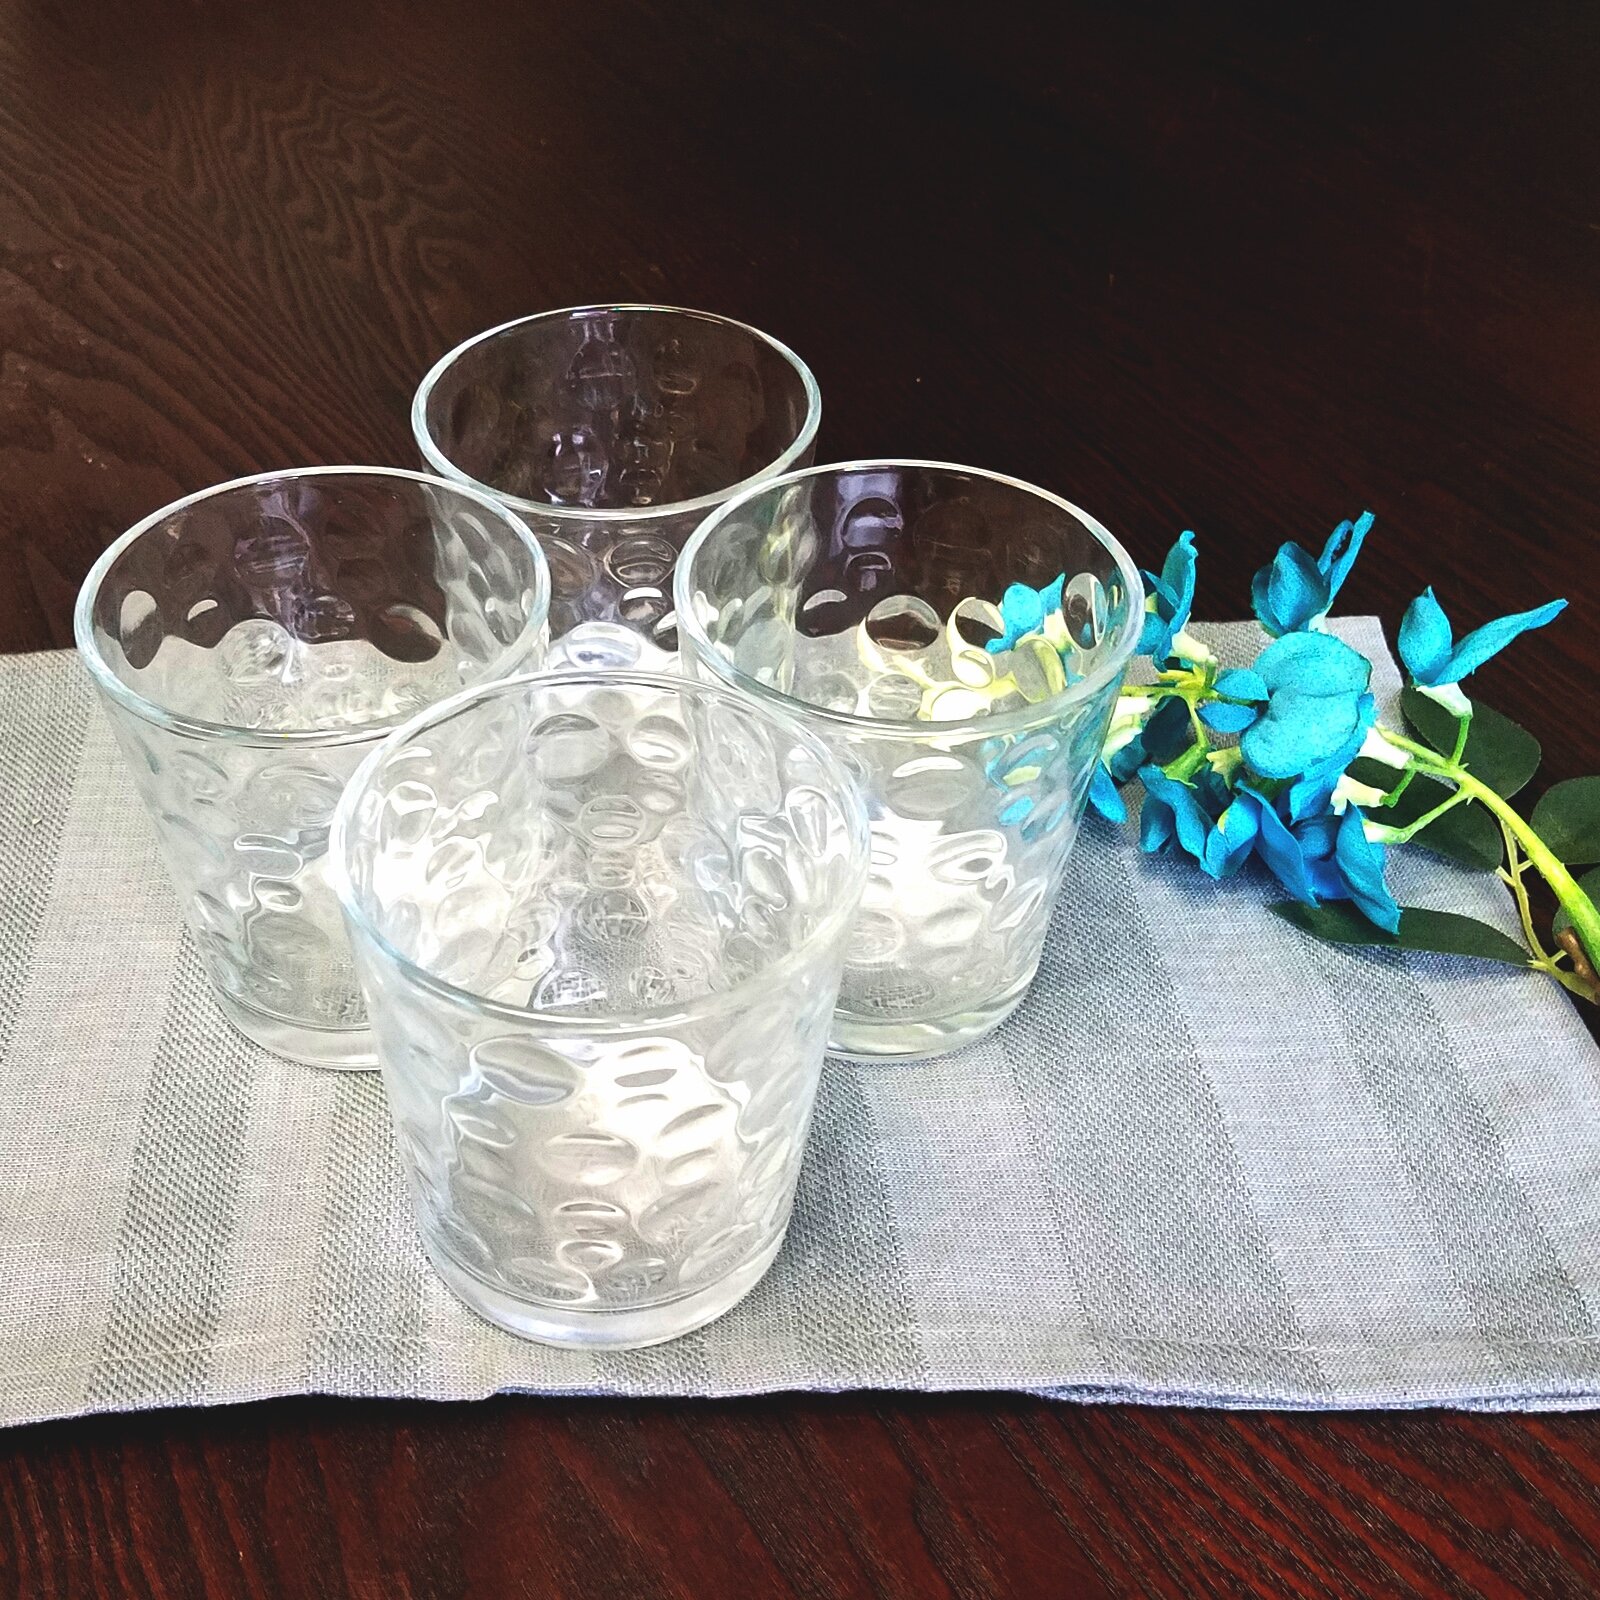 Senna 16 oz. Drinking Glass (Set of 4) Highland Dunes